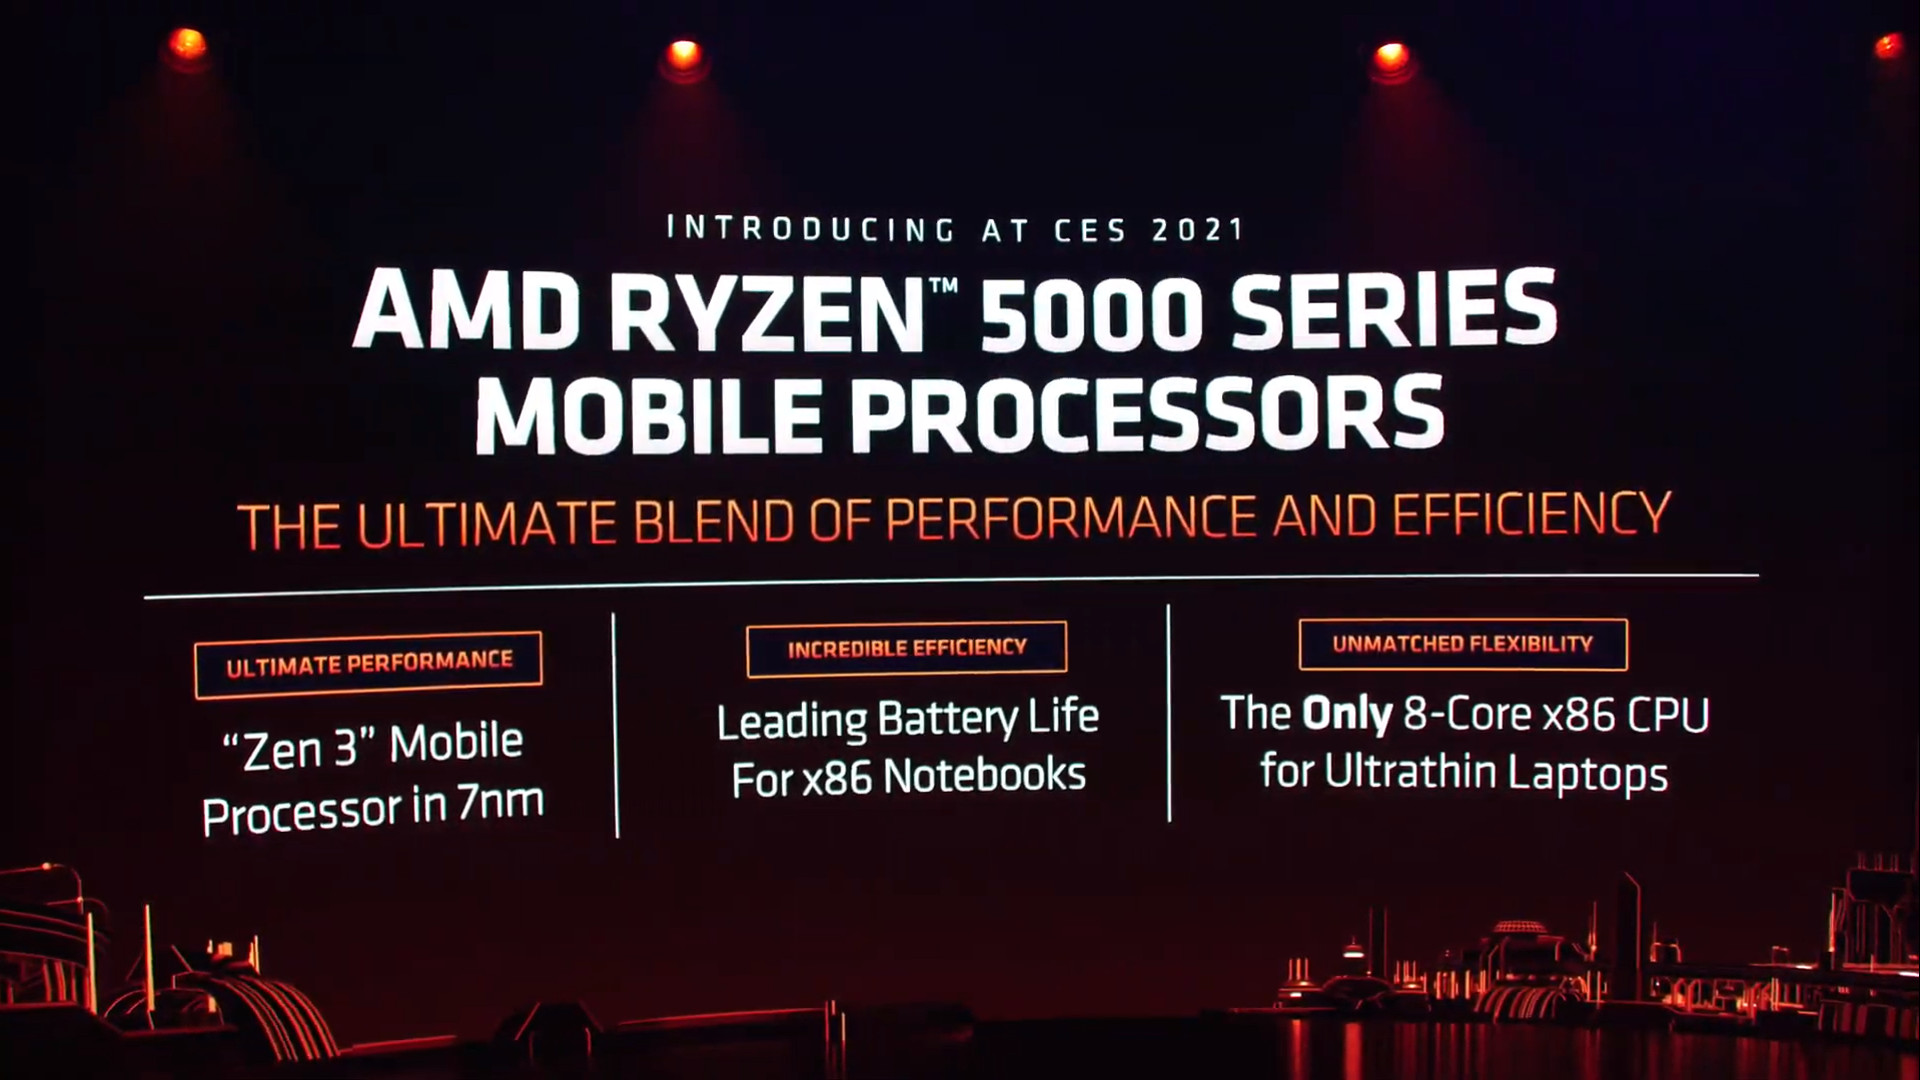 AMD Ryzen 5000 series